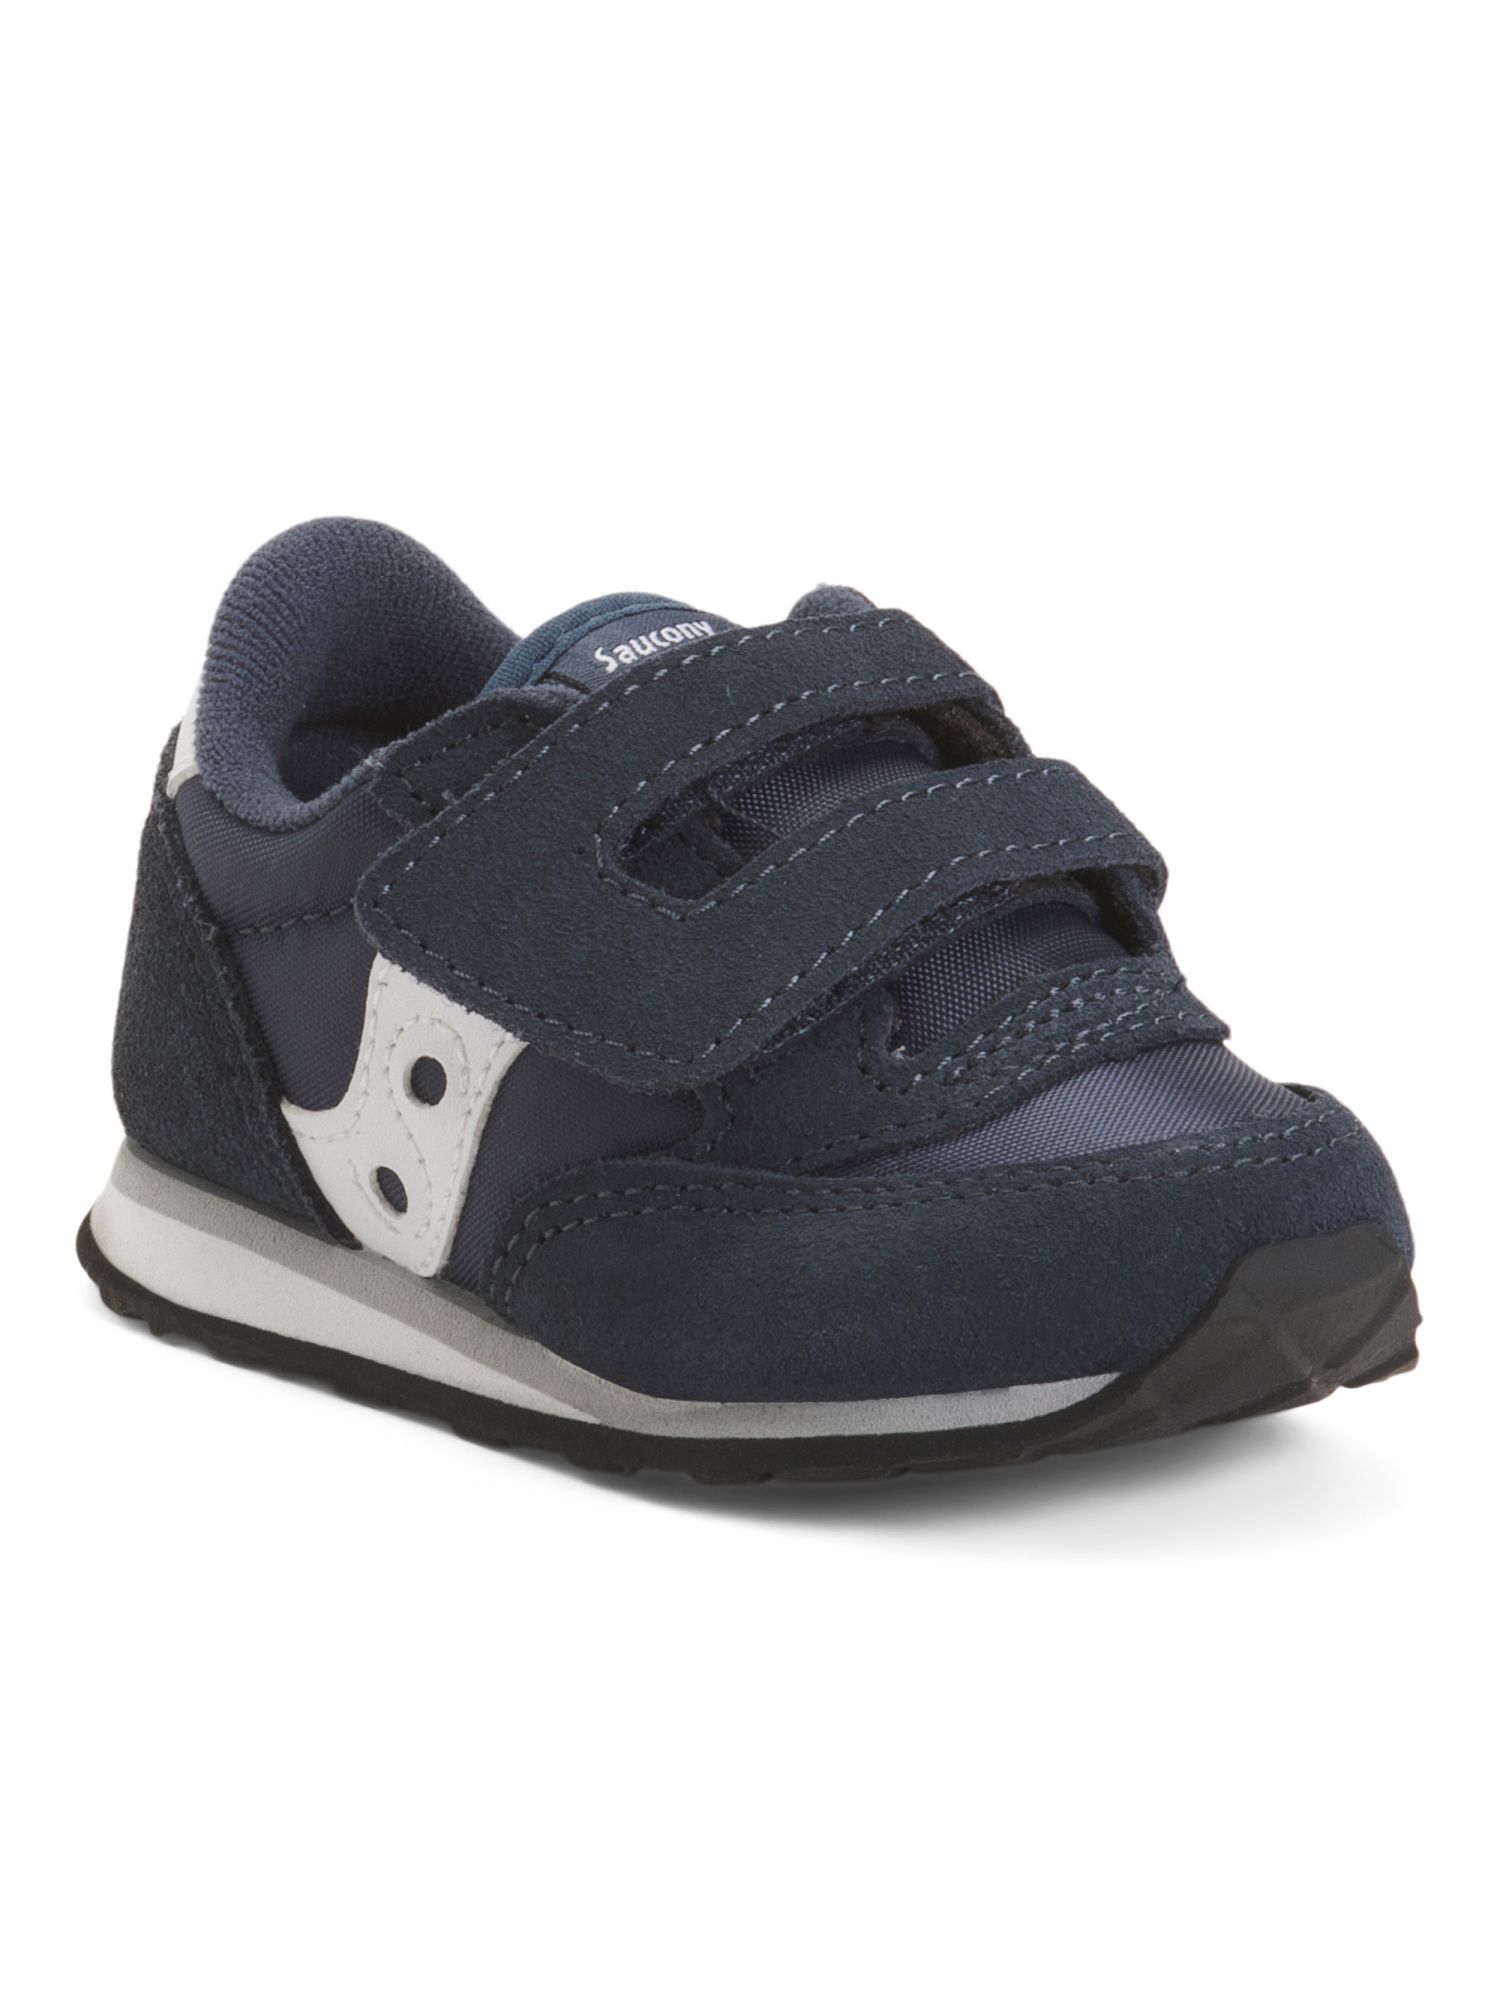 Velcro Strap Sneakers (toddler) | Toddler Boys' Shoes | Marshalls | Marshalls